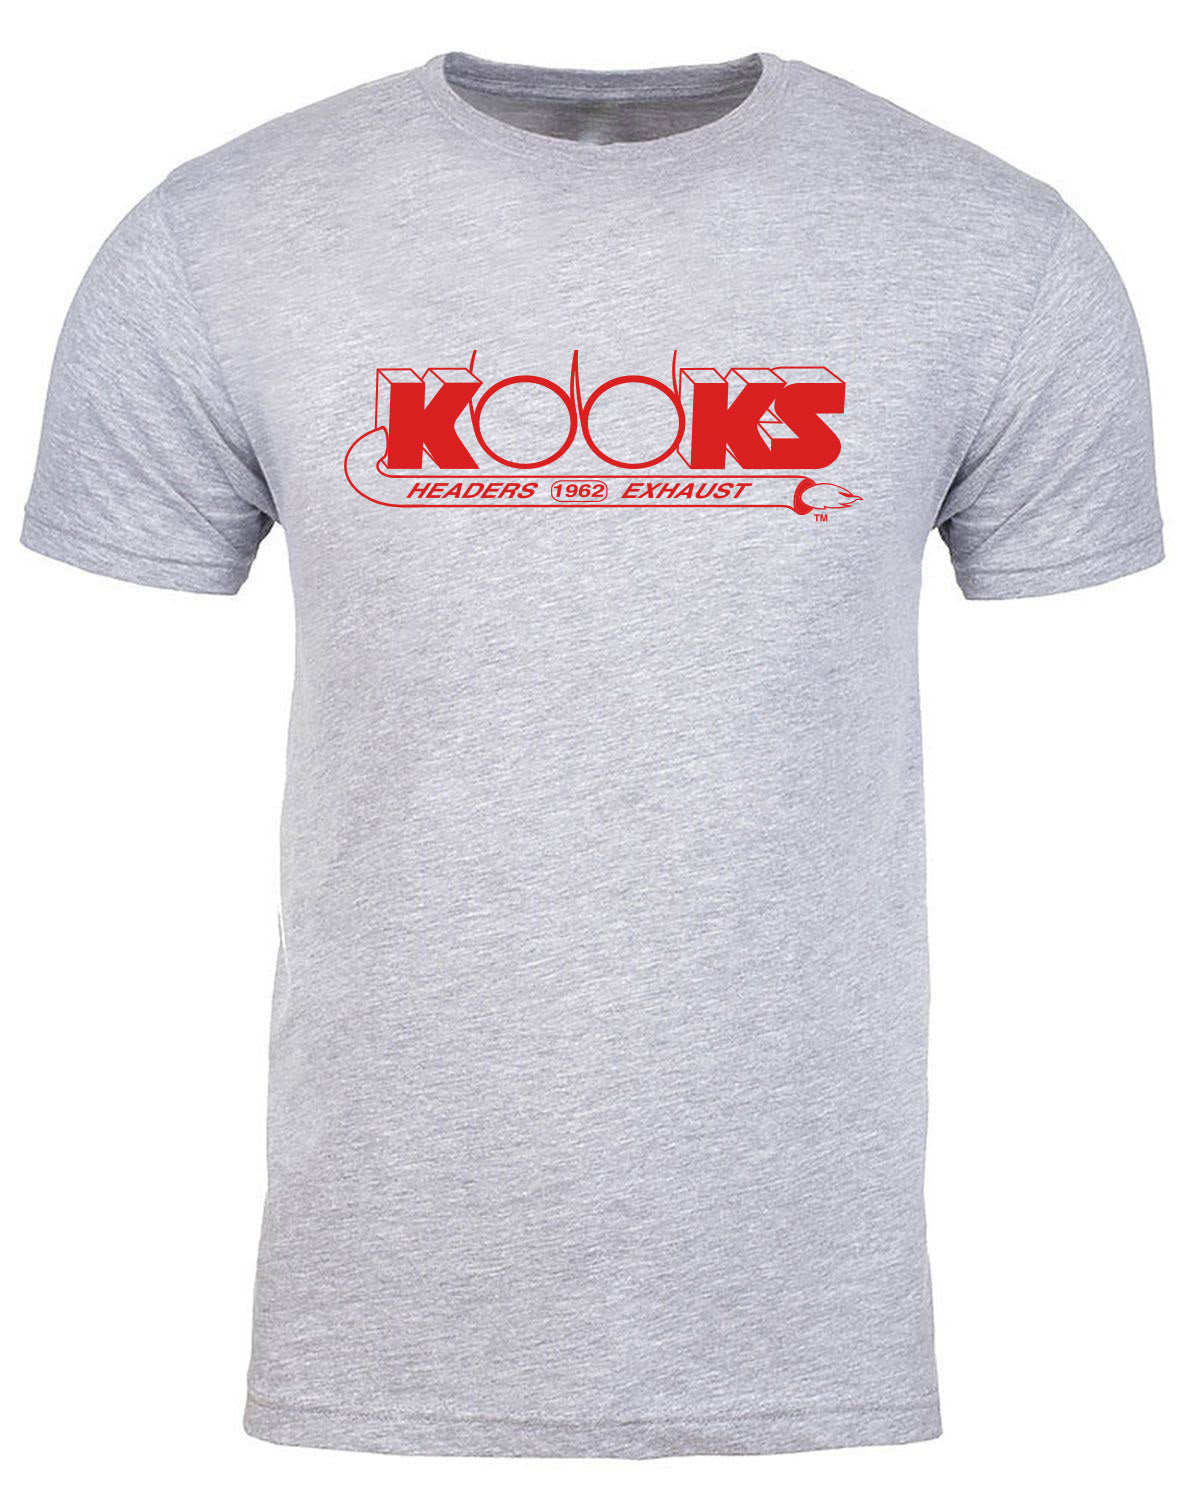 Kooks Custom Headers T-Shirt TS-100647-01